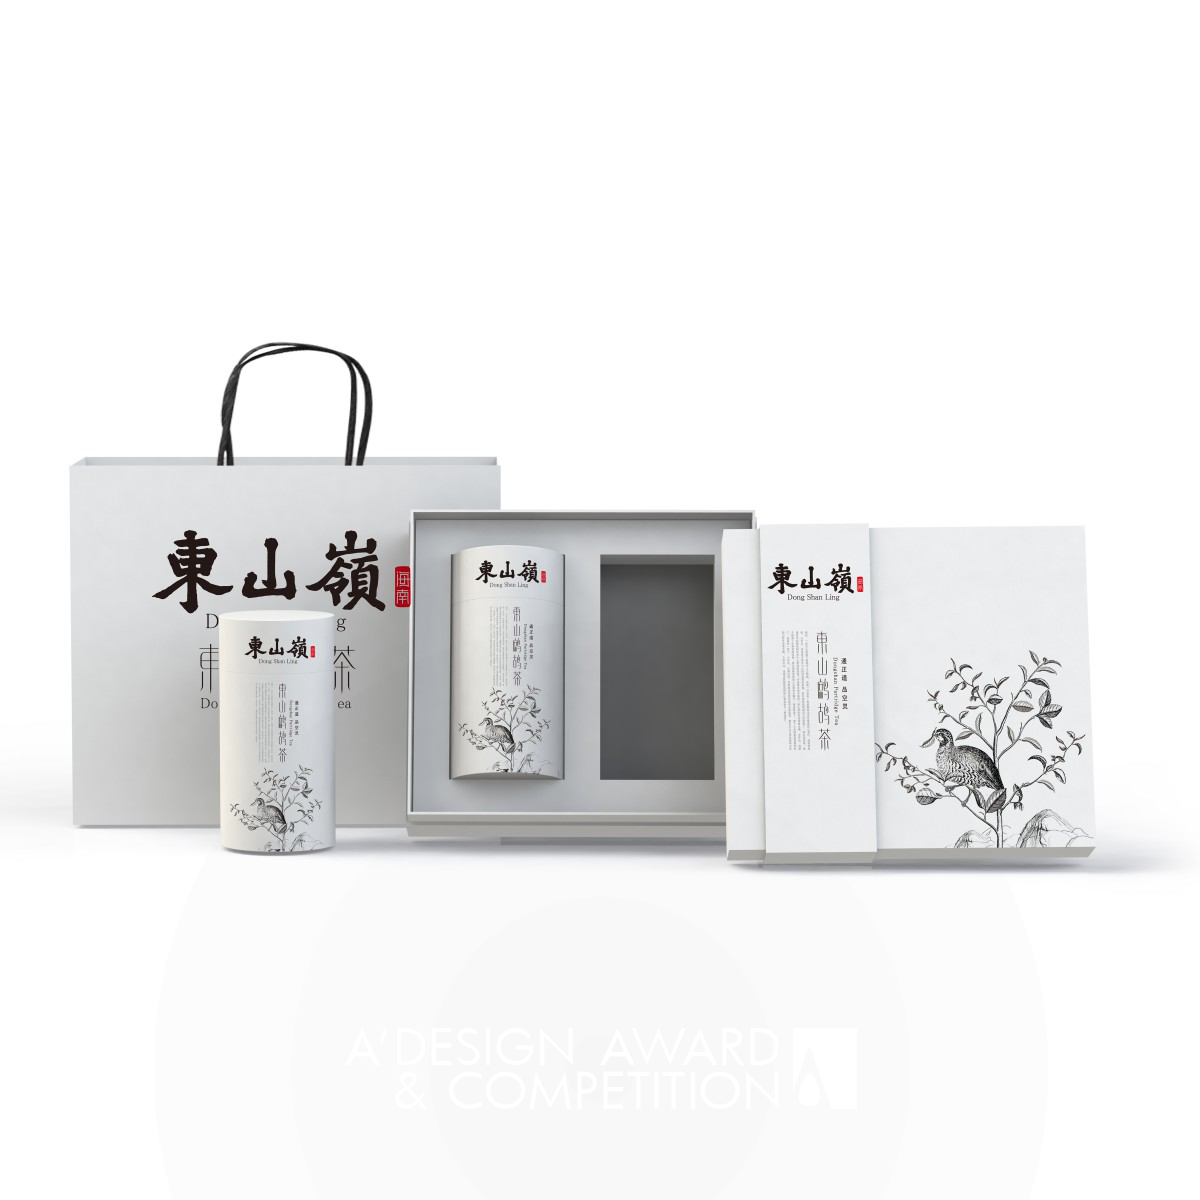 Zhe Gu Tea Environmental Packing by Sun Jian Silver Packaging Design Award Winner 2019 